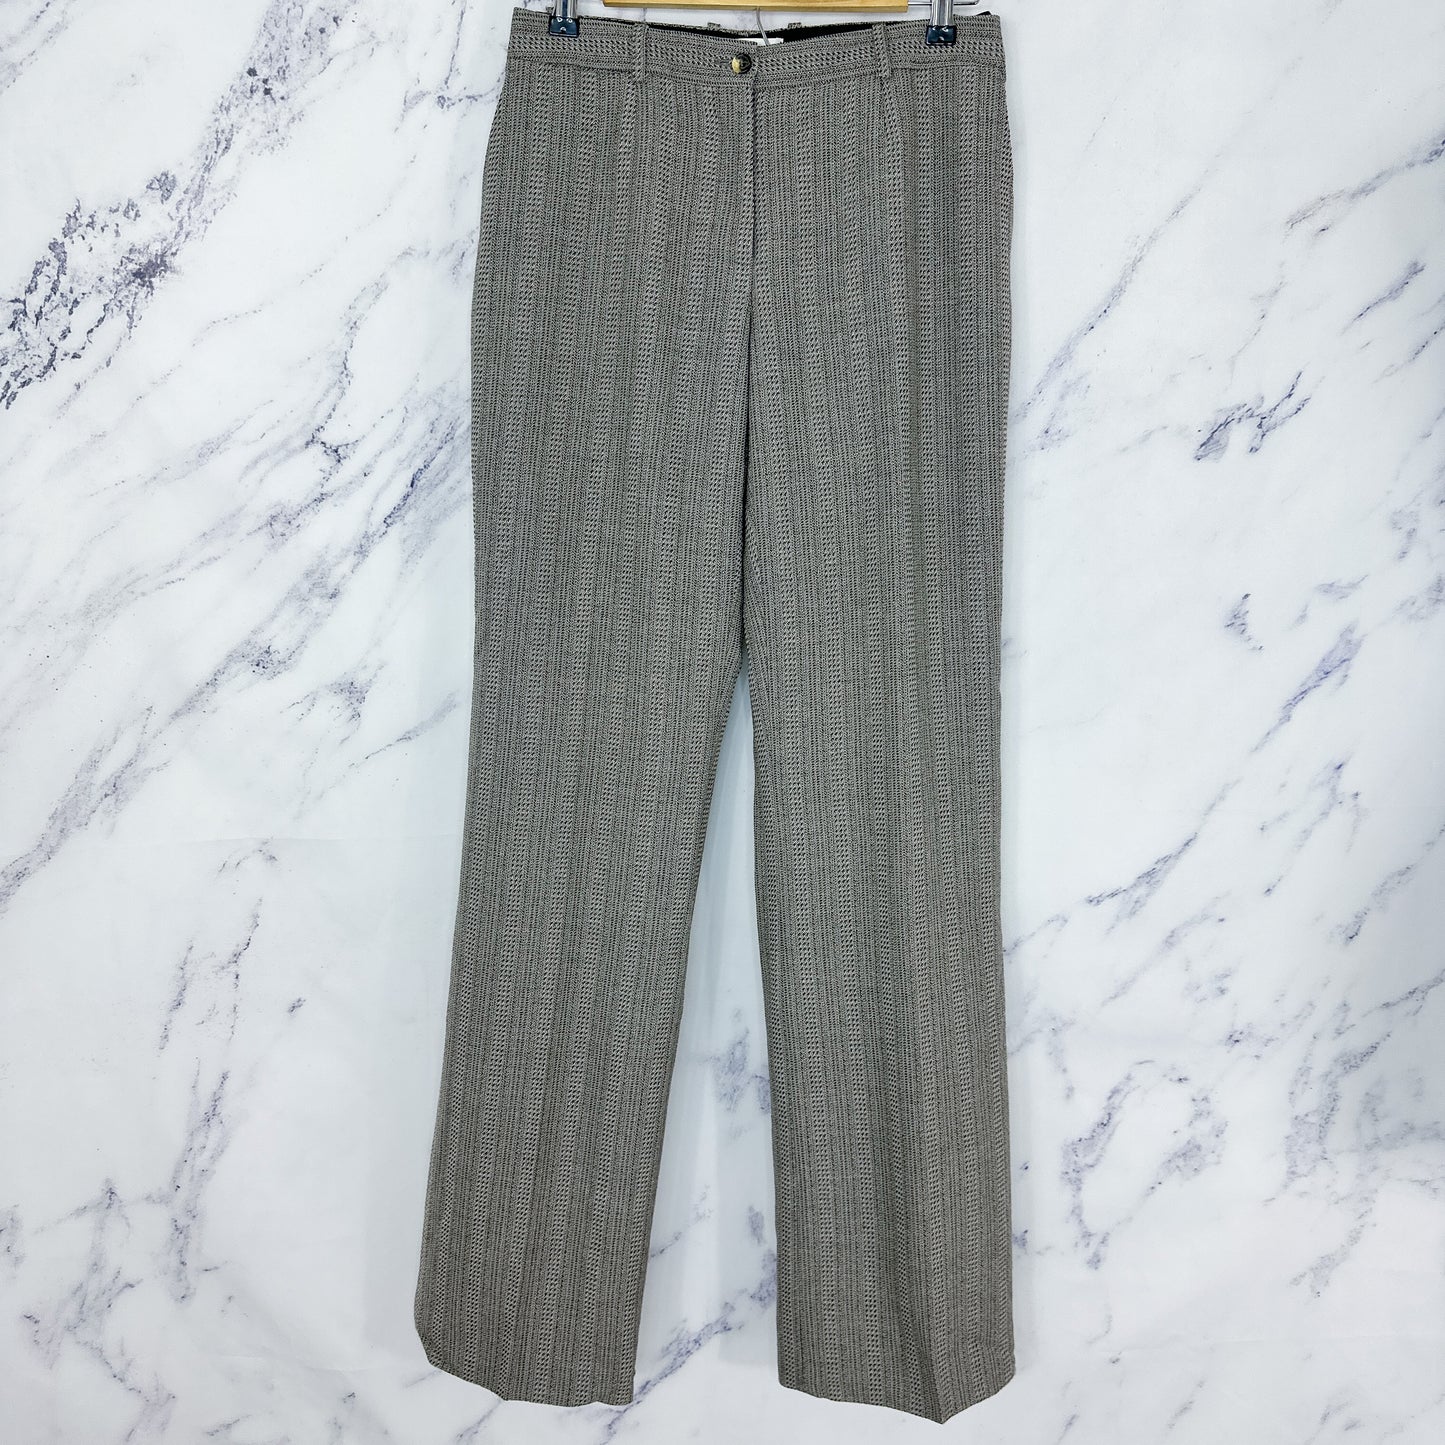 Celine | Grey Wool Pants | Sz EU 40 / US 4